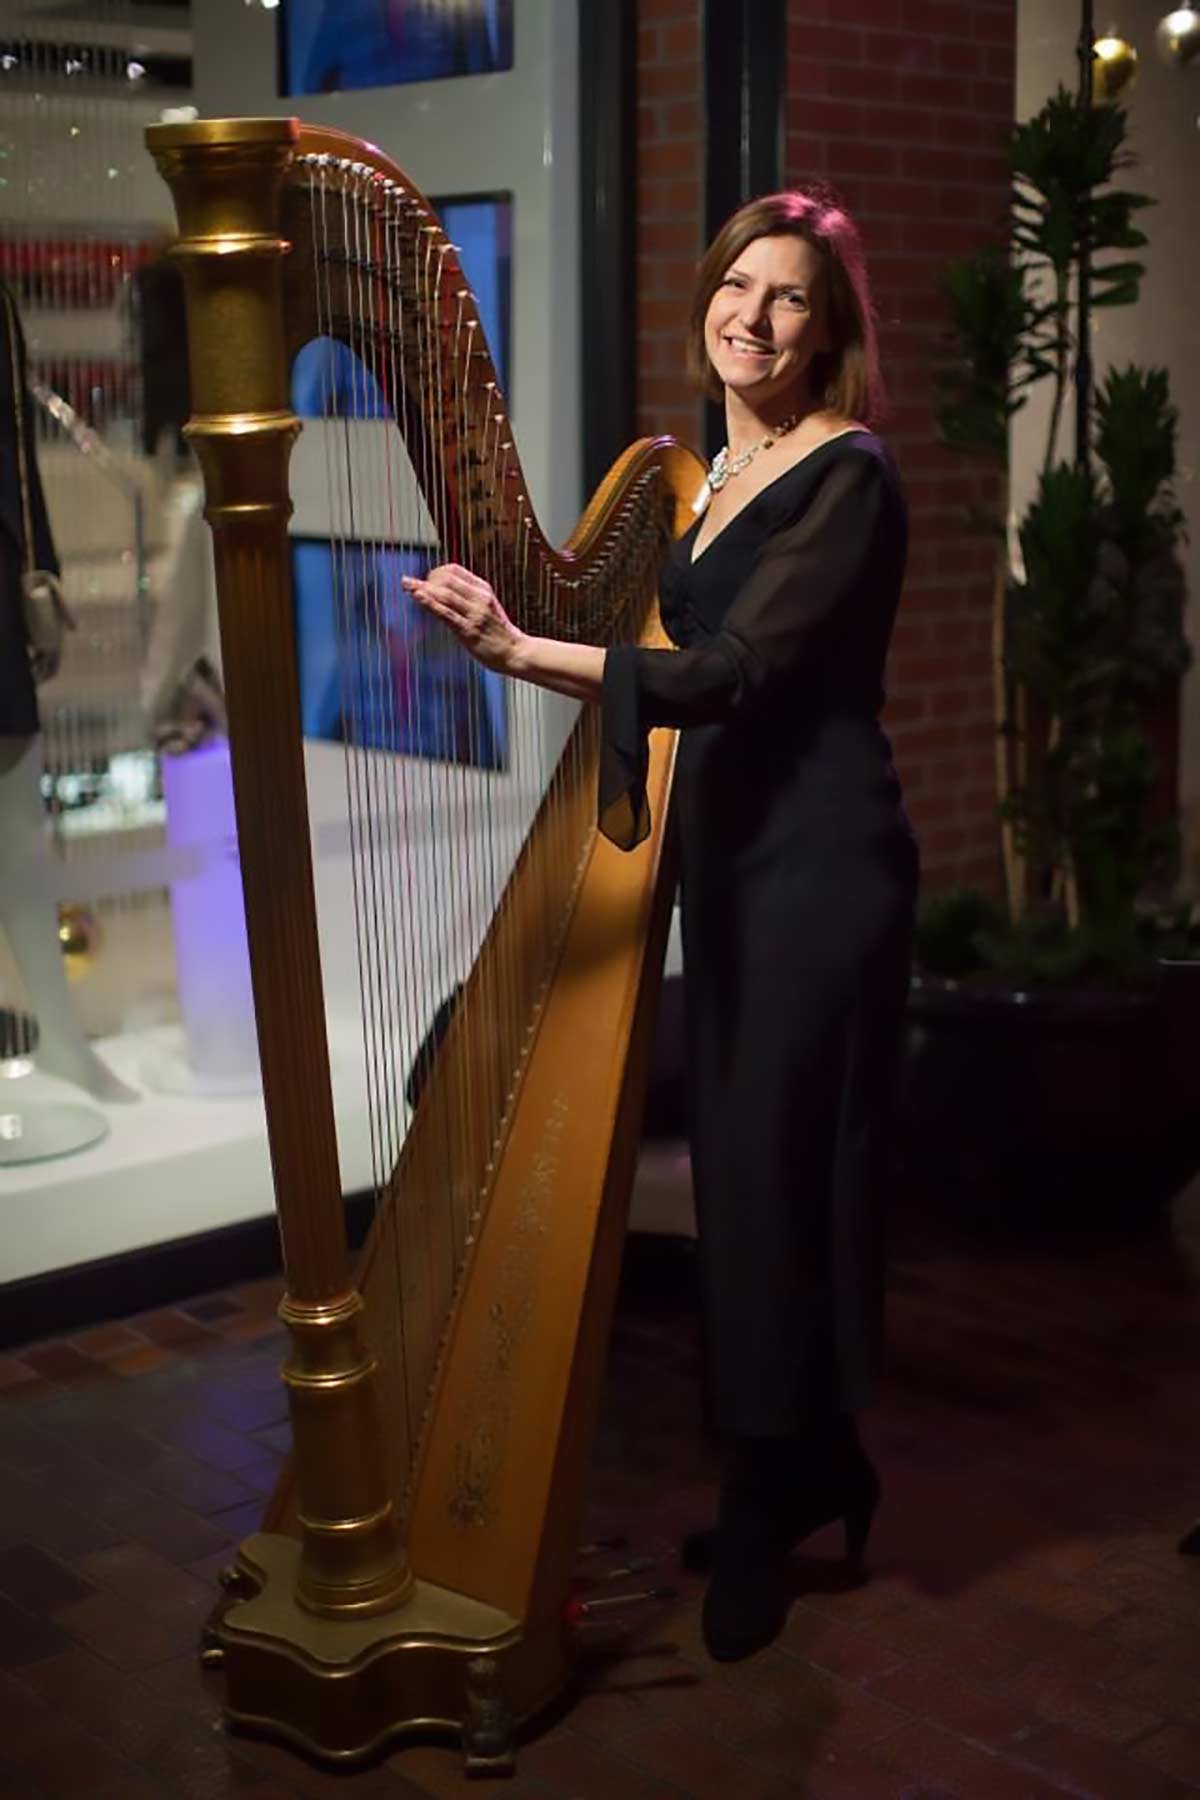 Olga with her harp